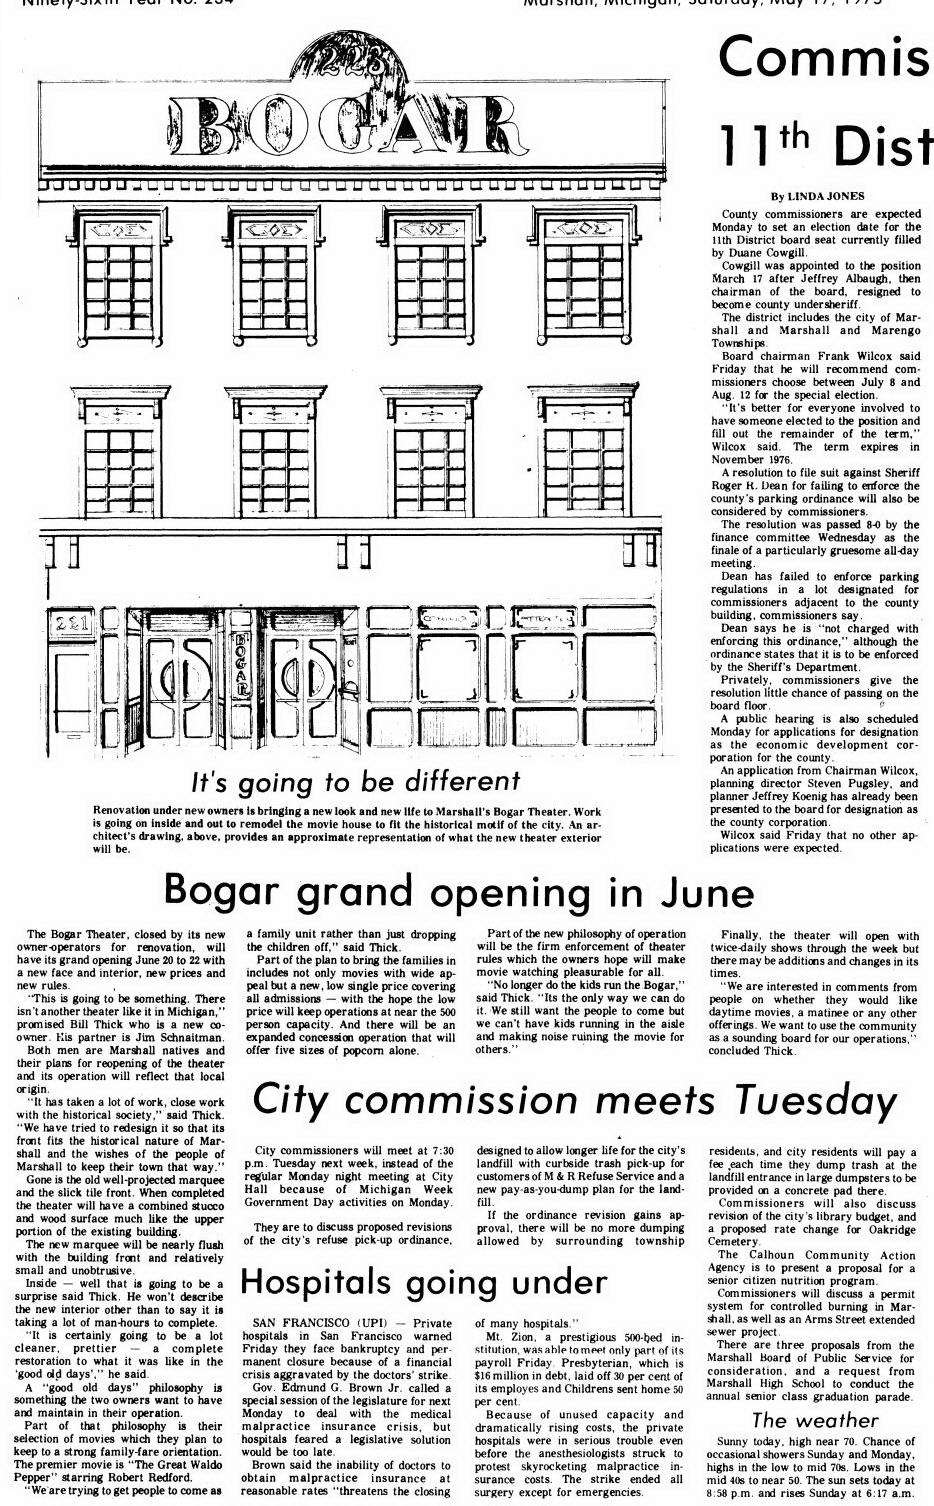 Bogar Theatre - MAY 17 1975 ARTICLE